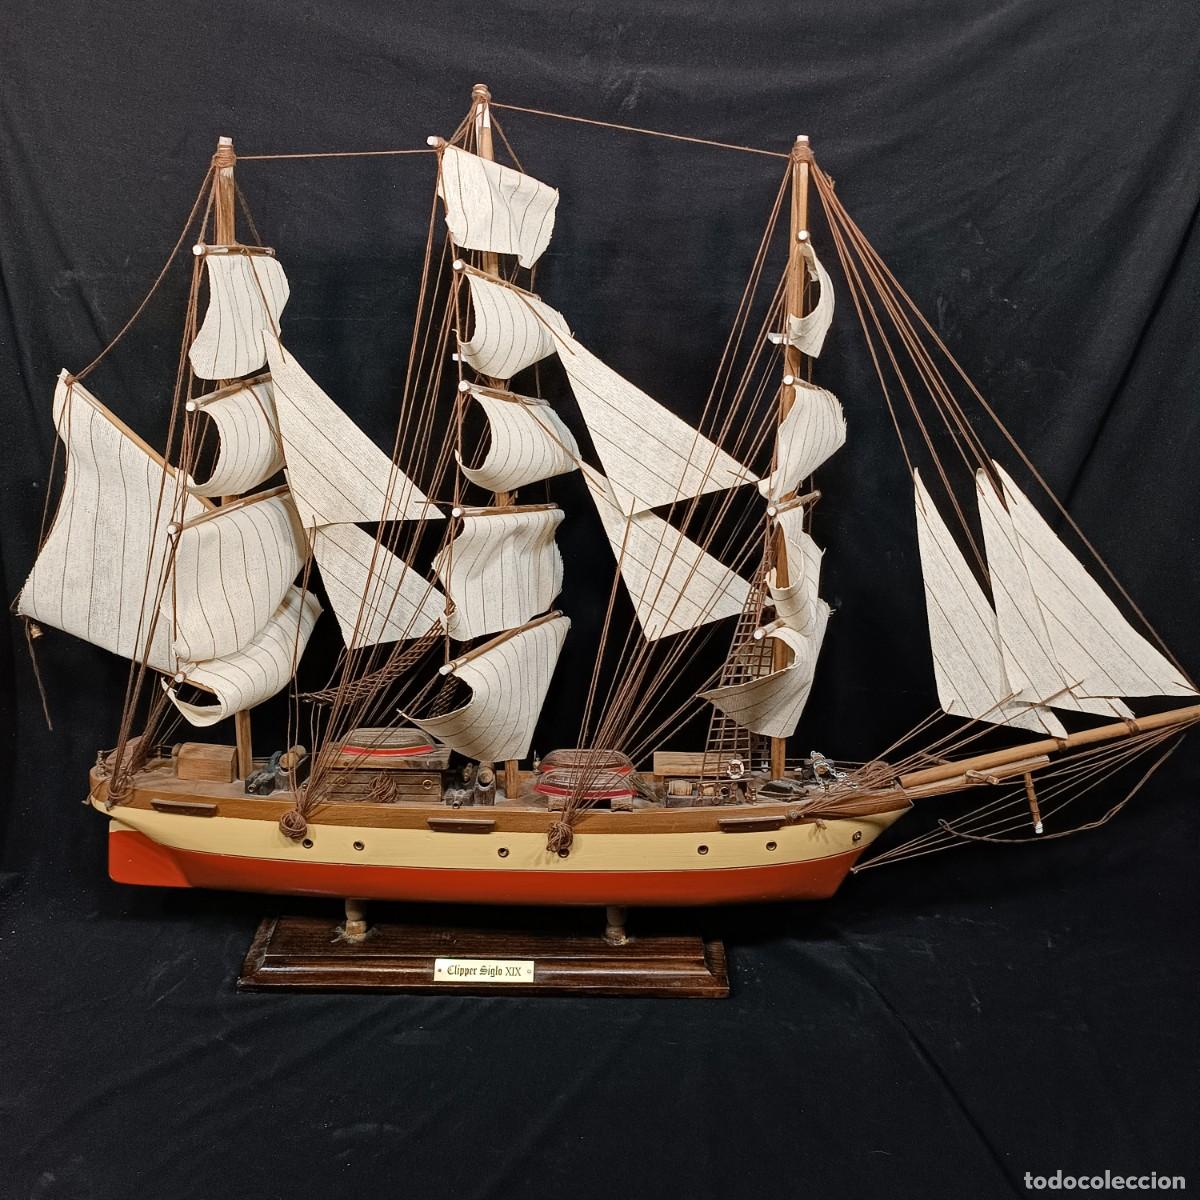 barco clipper siglo xix en madera - maqueta de - Buy Scale models of boats  and ships on todocoleccion